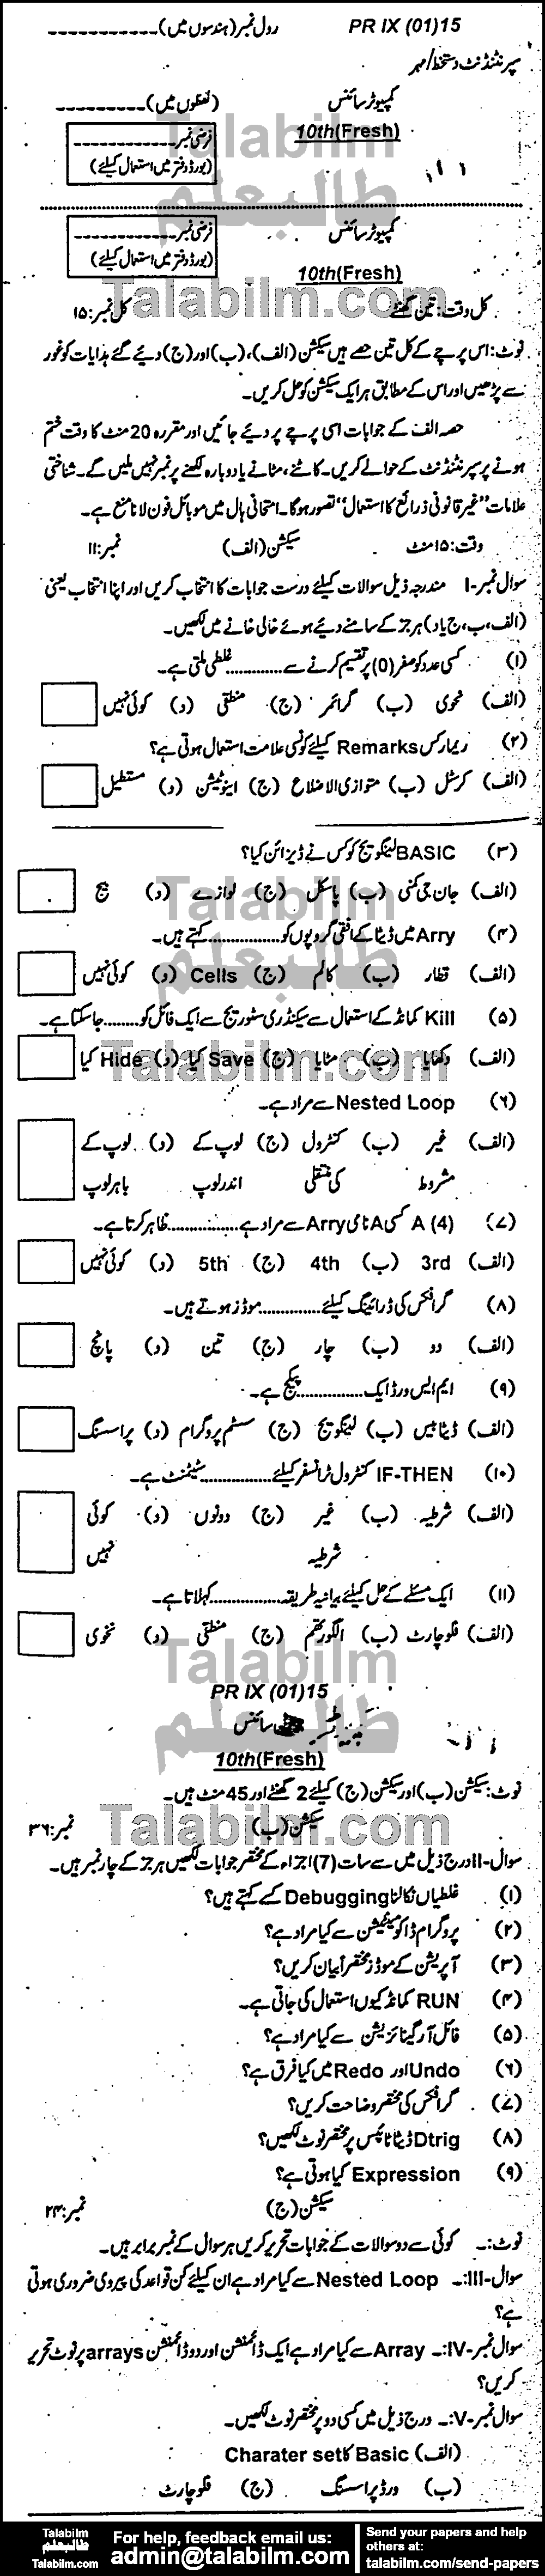 Computer Science 0 past paper for Urdu Medium 2014 Group-I